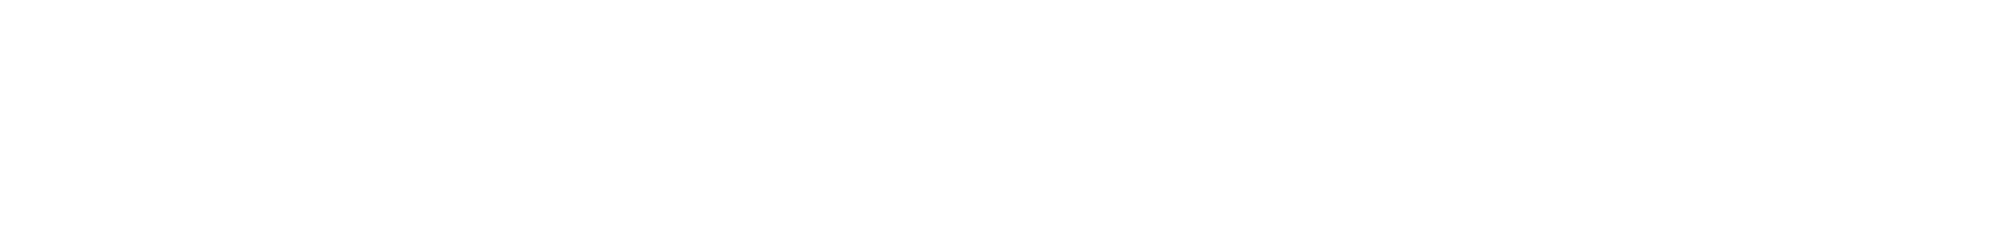 University of California Education Abroad Program logo